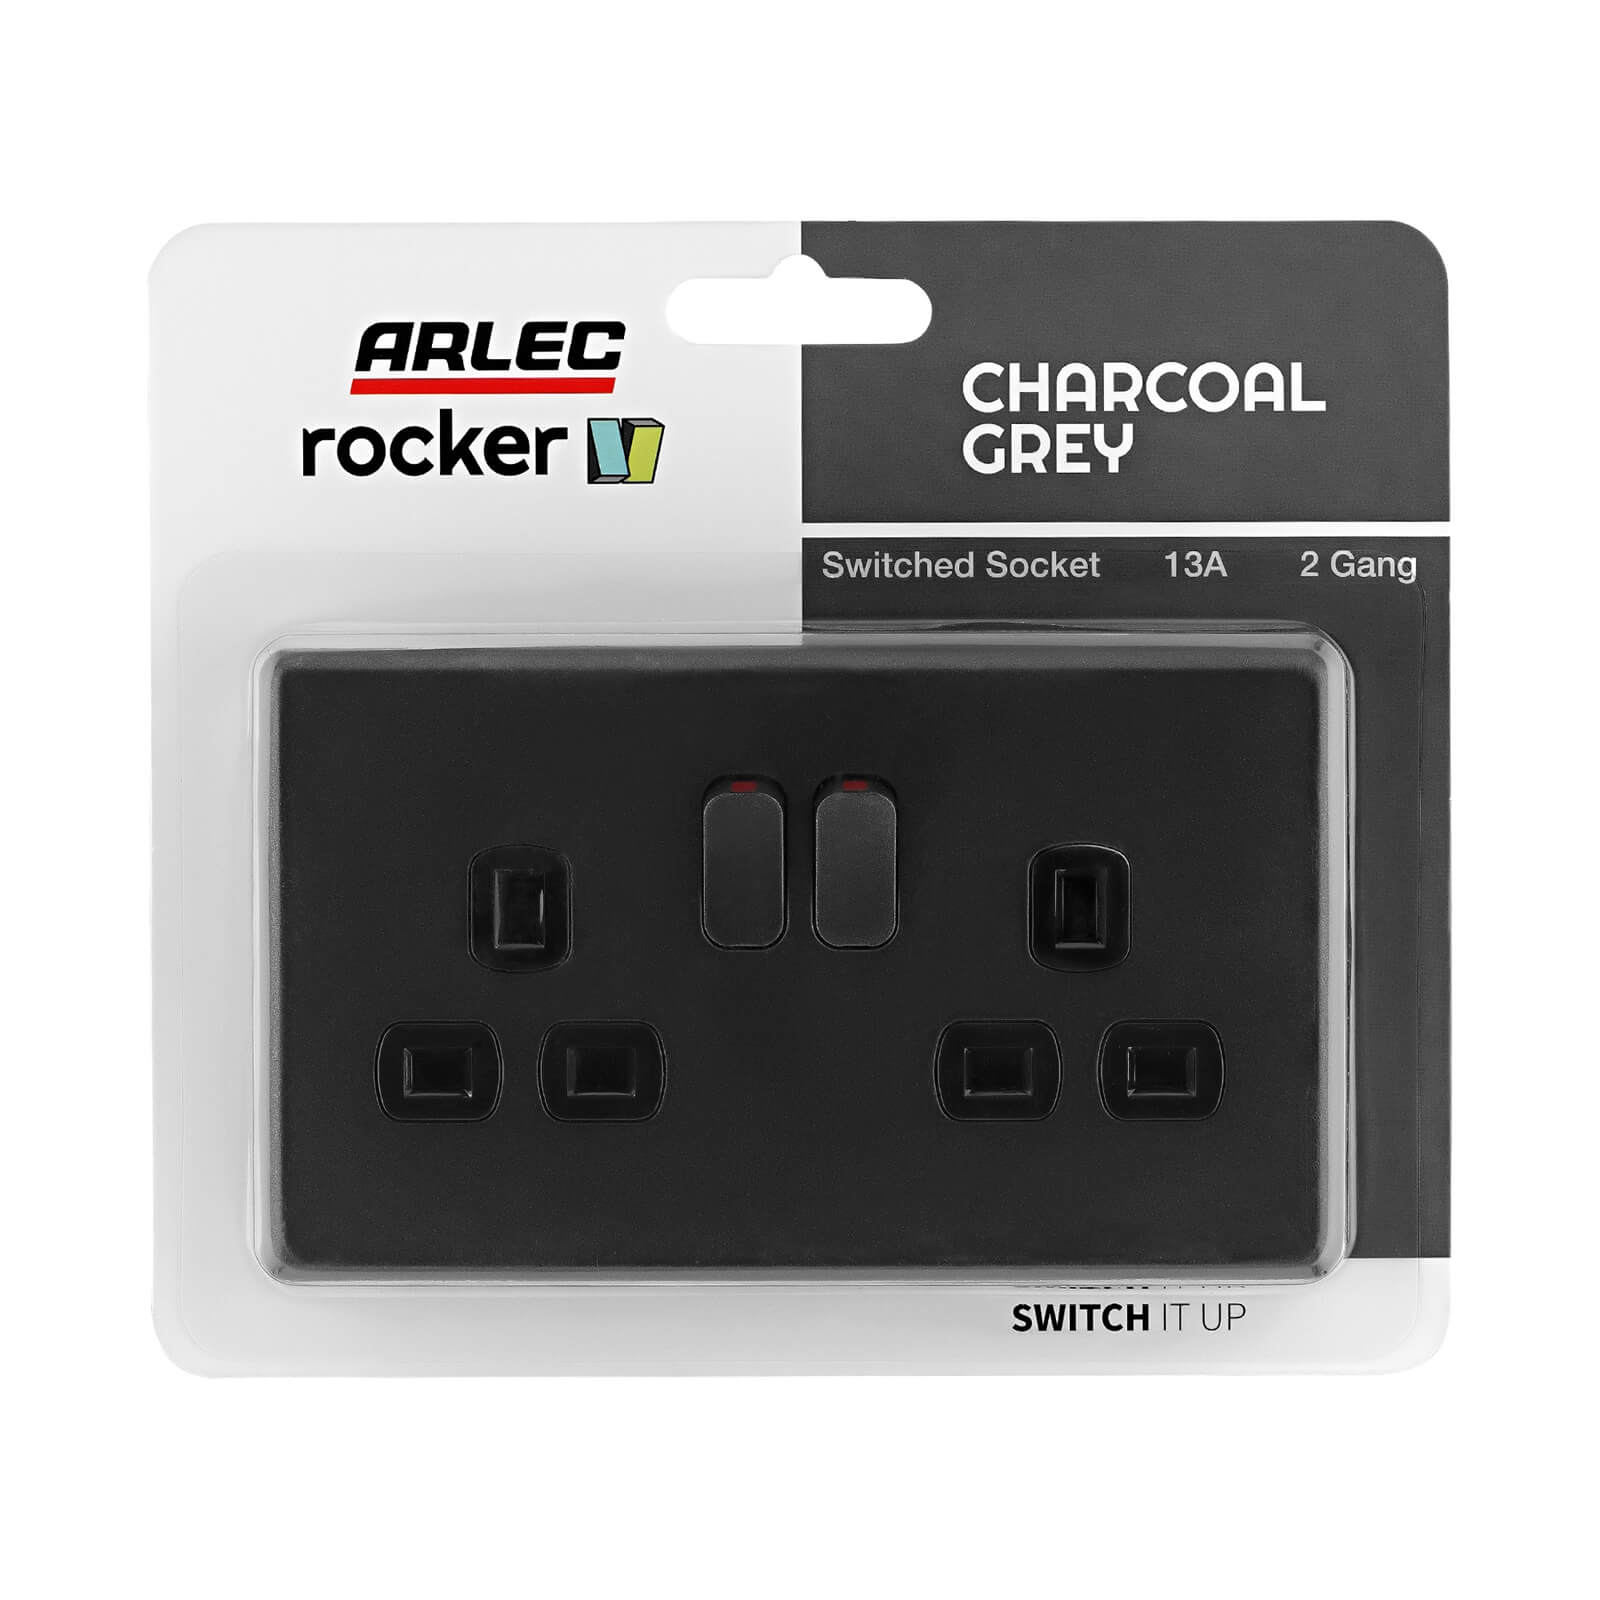 Arlec Rocker 13A 2 Gang Charcoal Grey Double switched socket